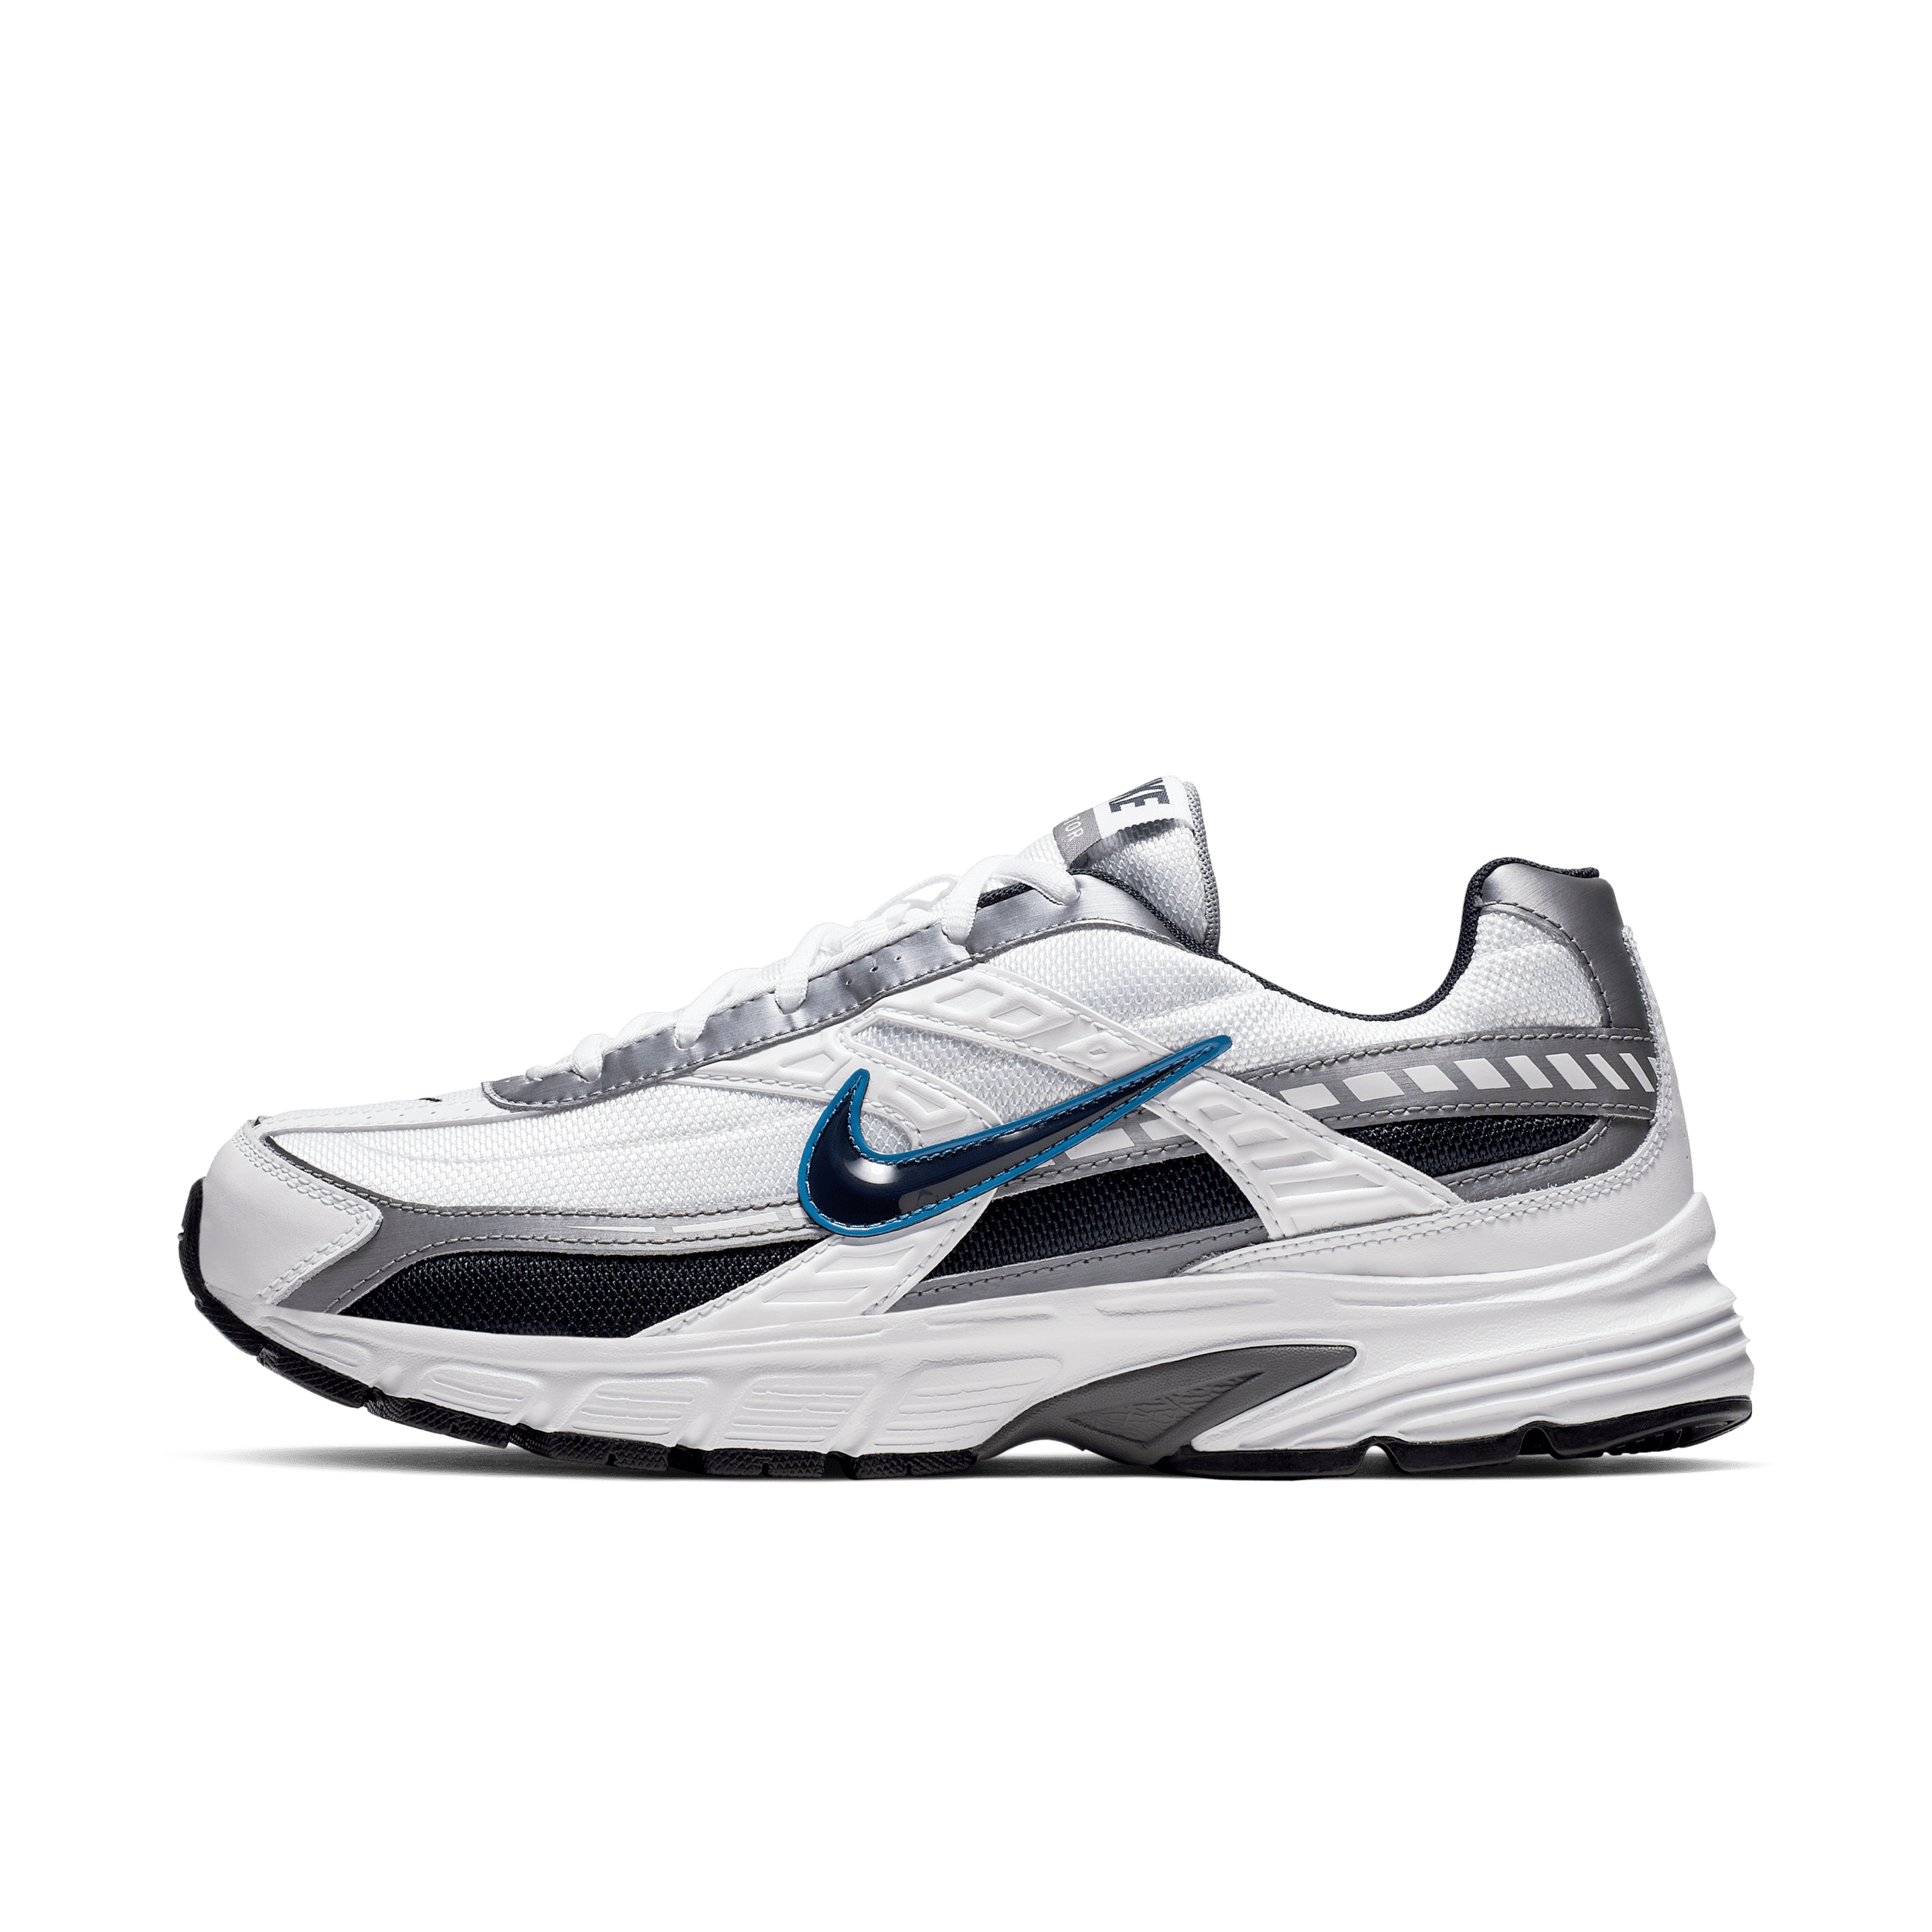 Chaussure de running Nike Initiator pour Homme - Blanc